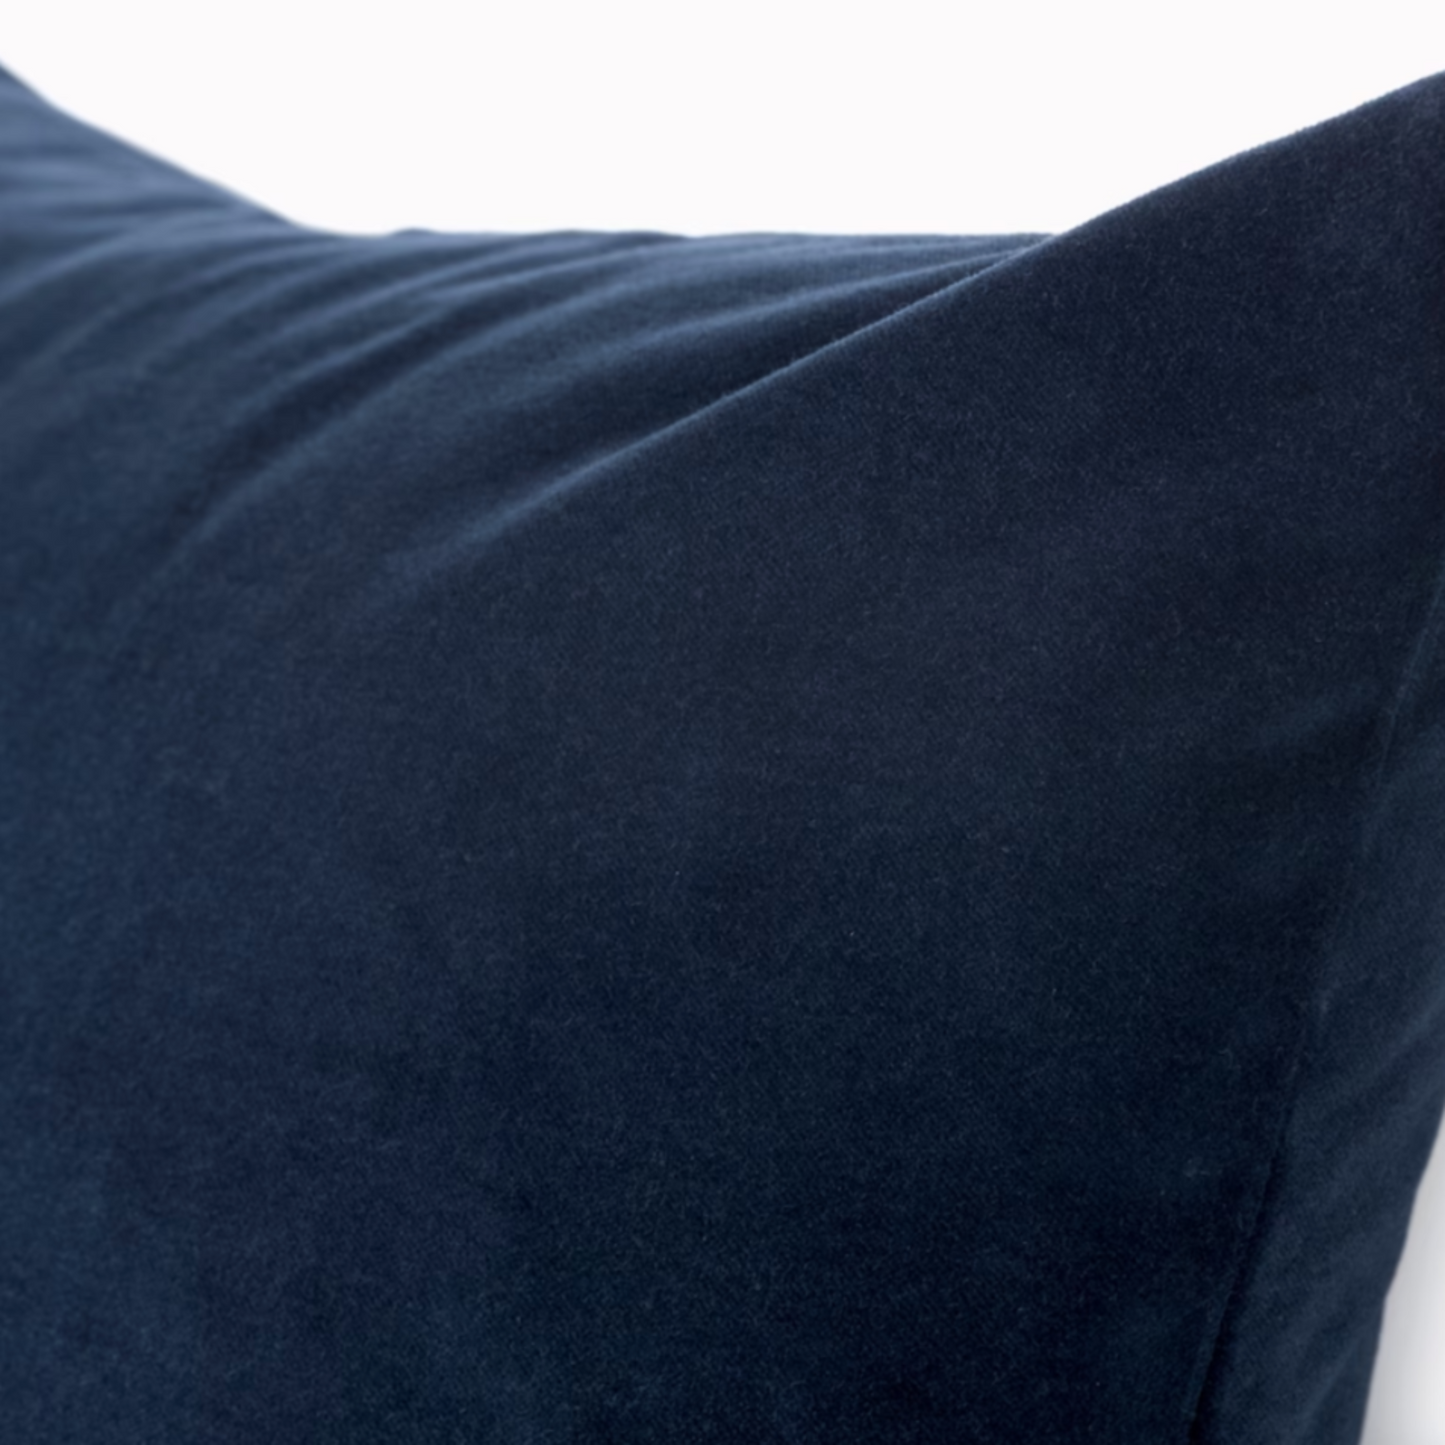 Ikea Sanela Cushion Cover 50x50cm, Dark-Blue (8581566300447)